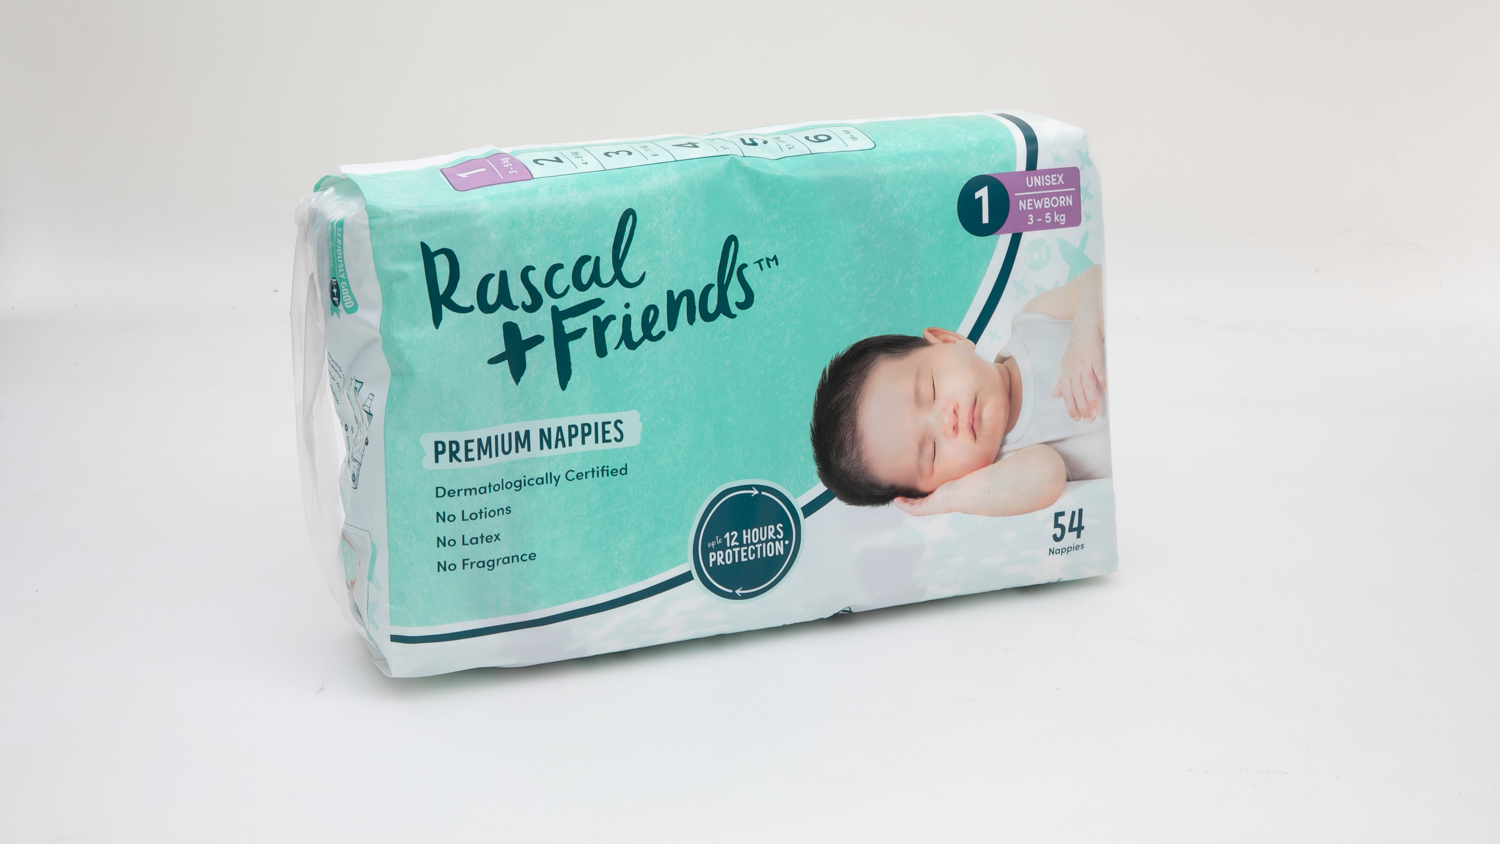 Rascal + Friends Premium Nappies Unisex Newborn Size 1 carousel image